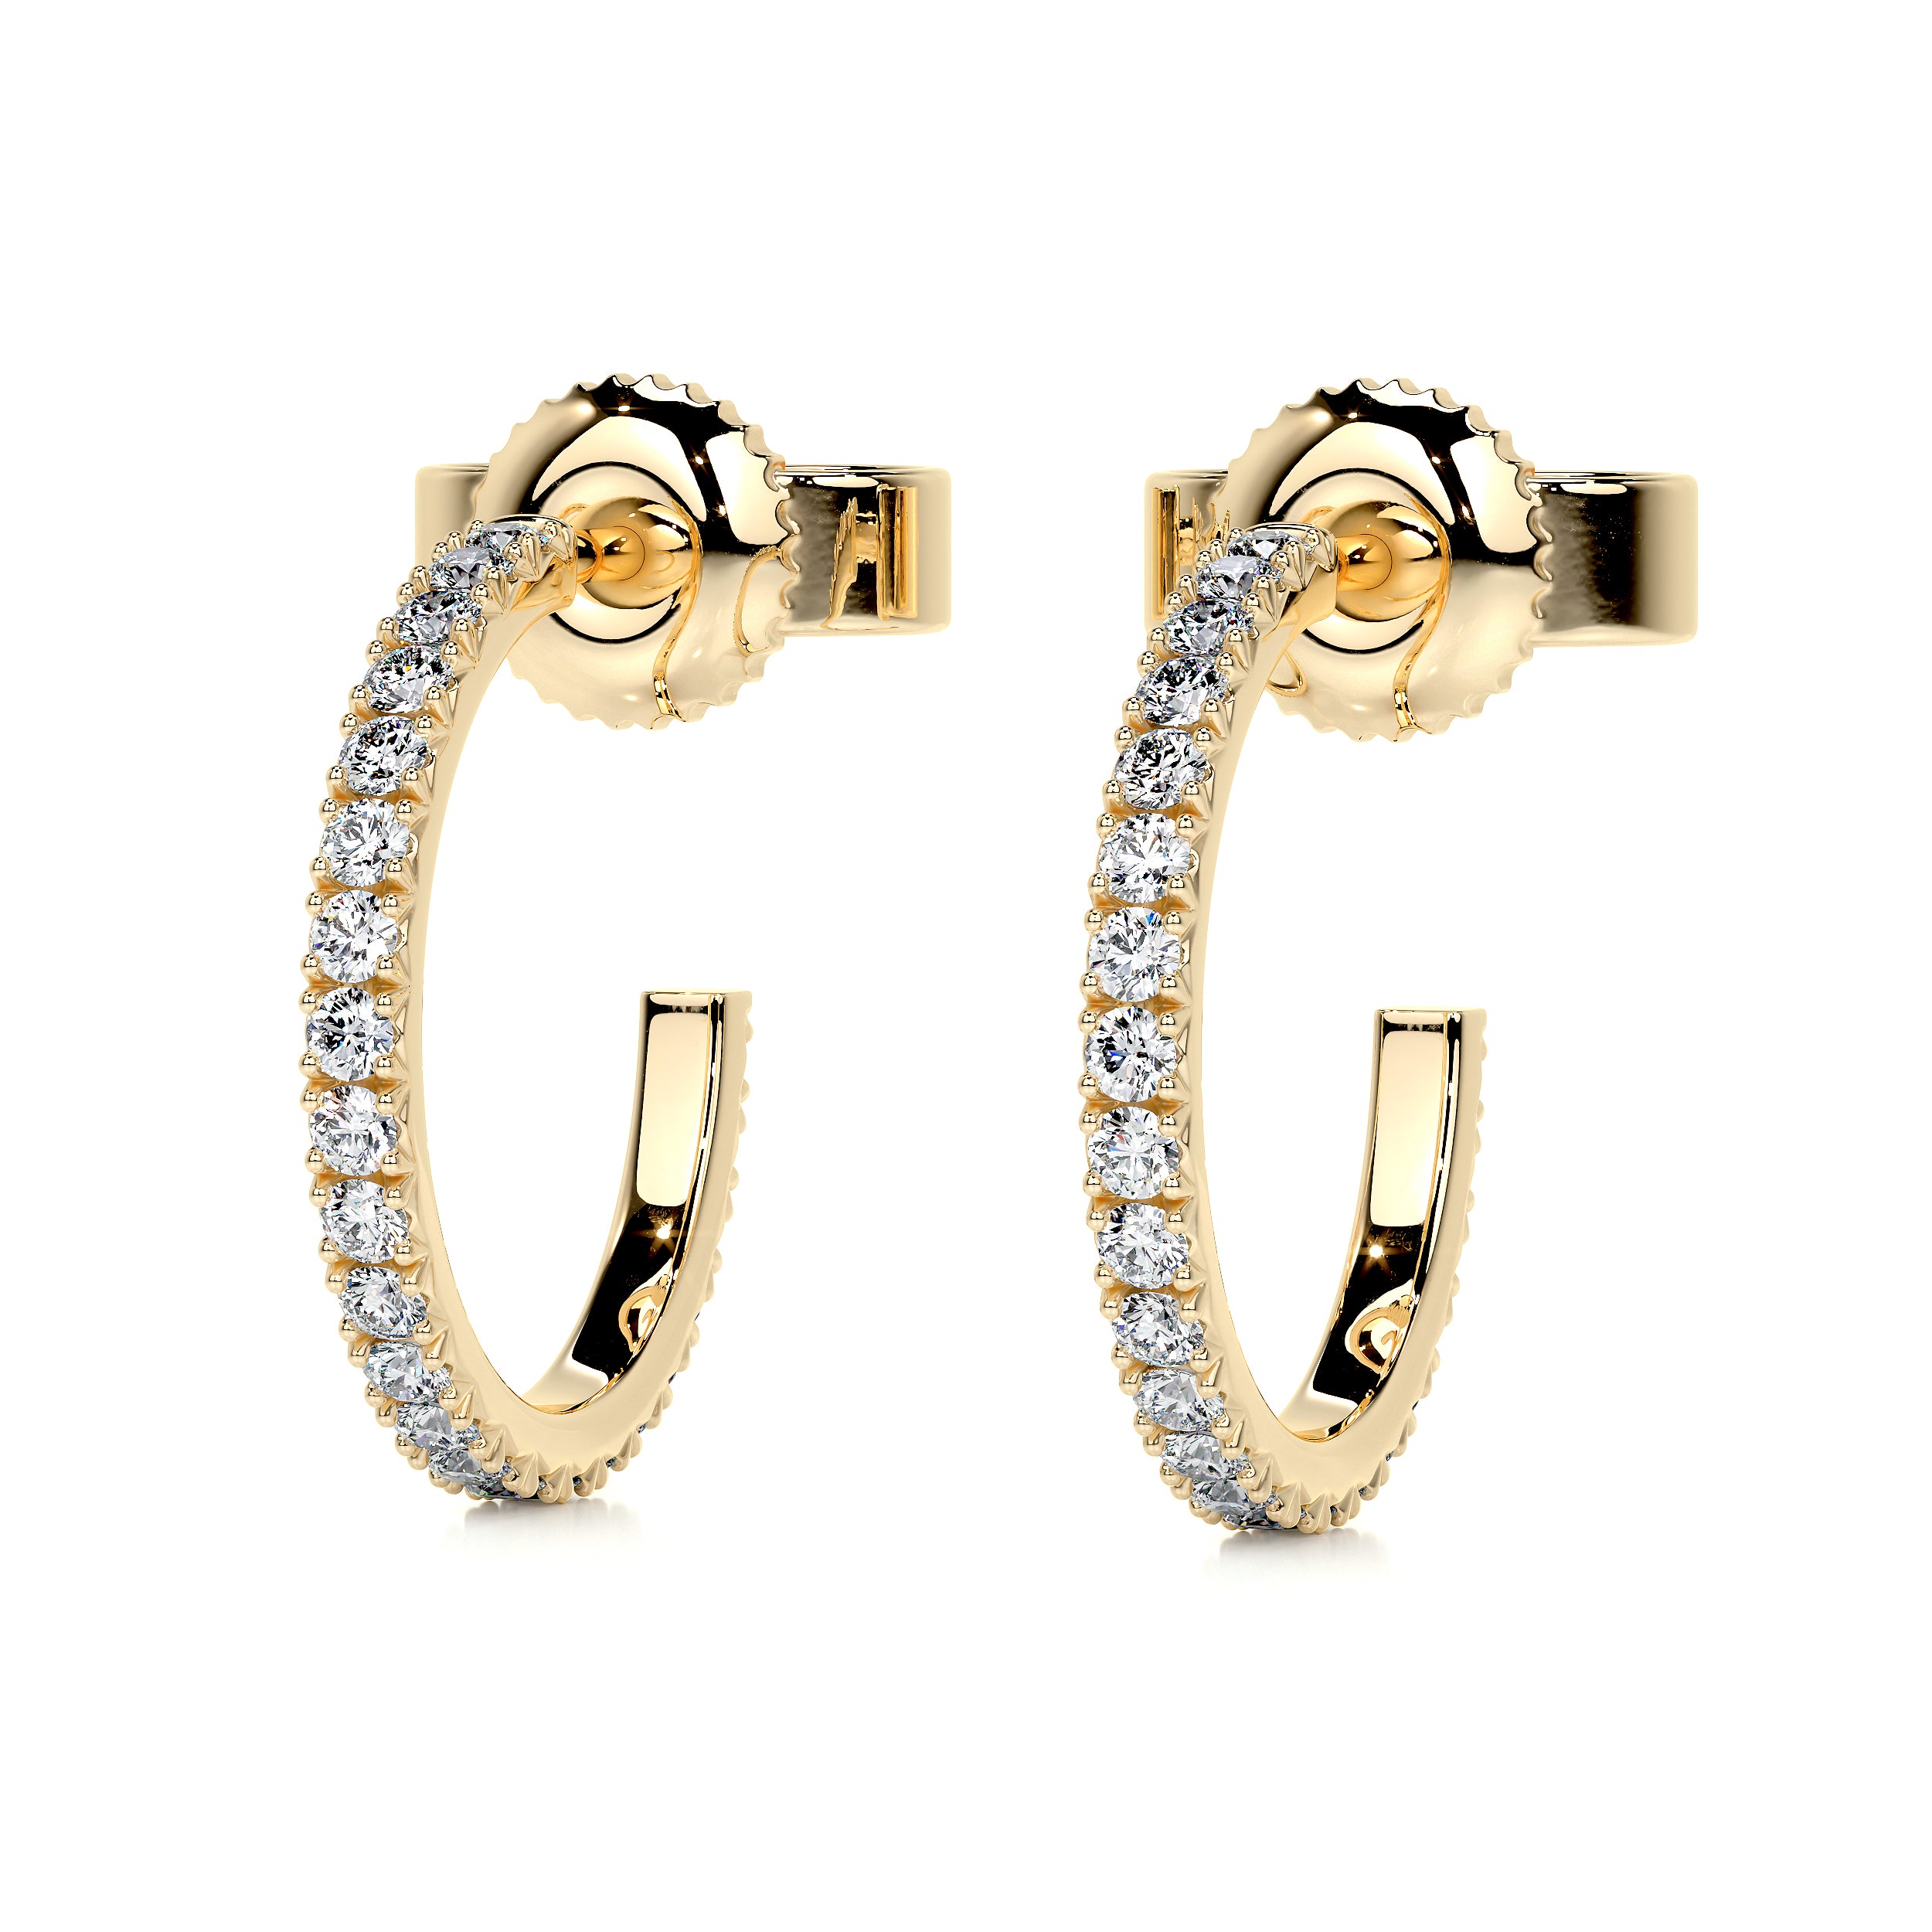 Nicole Diamond Earrings   (0.50 Carat) -18K Yellow Gold